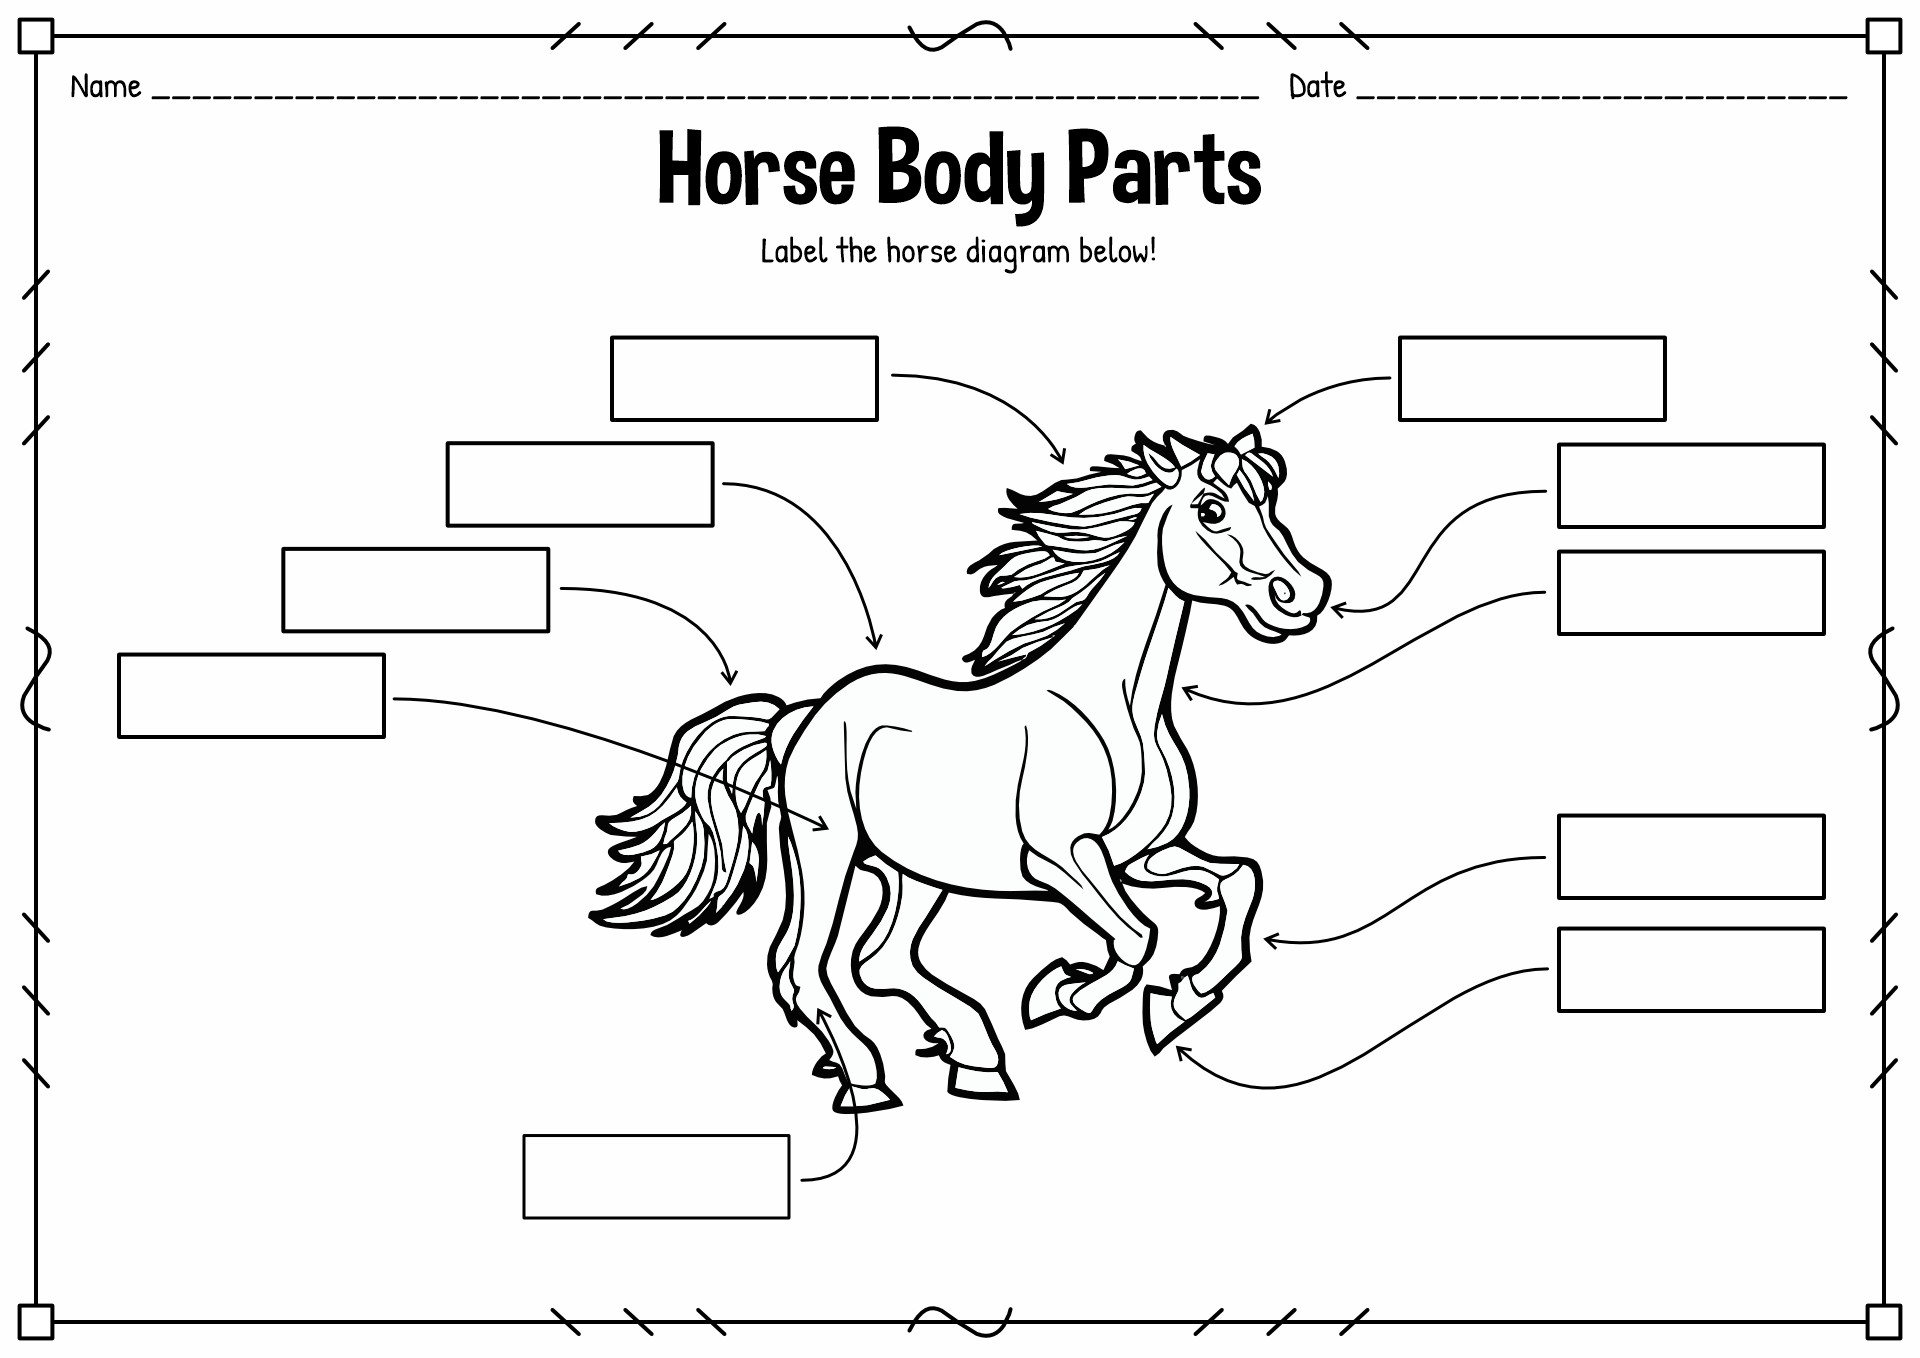 20 Worksheet Parts Of A Horse Pony Club - Free PDF at worksheeto.com